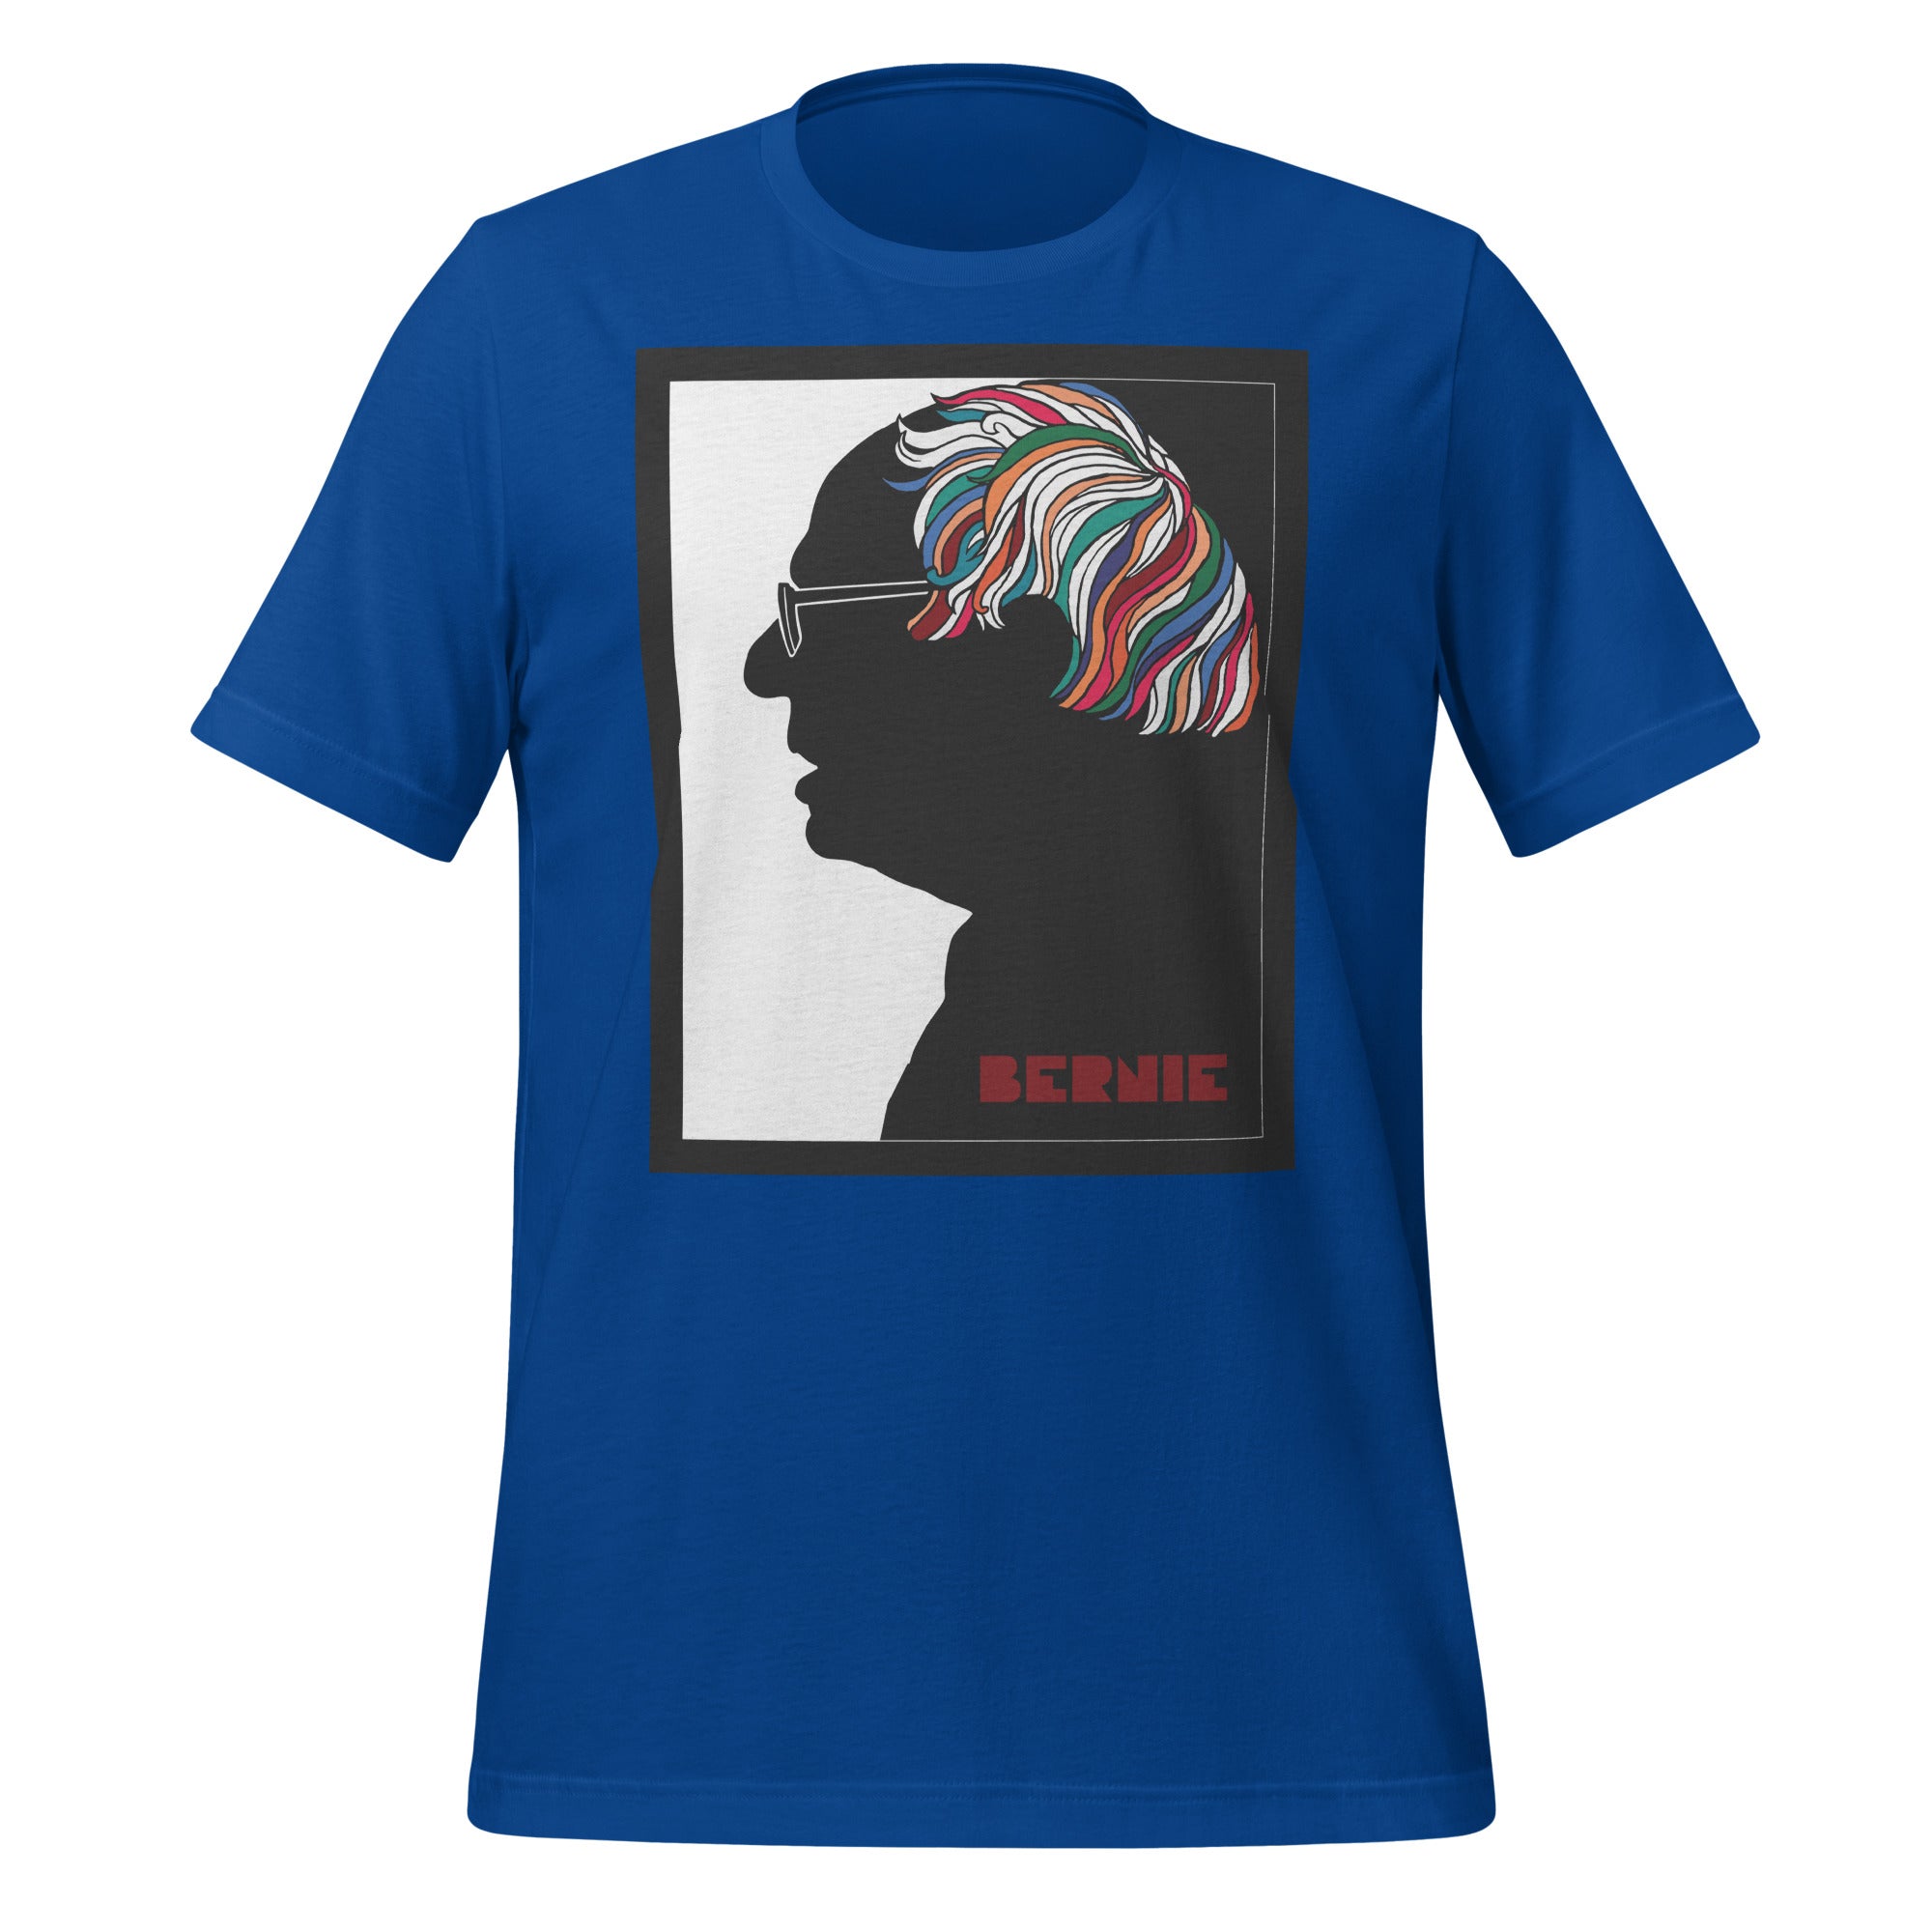 Bernie Sanders Psychedelic Hair Milton Glaser Parody T-Shirt